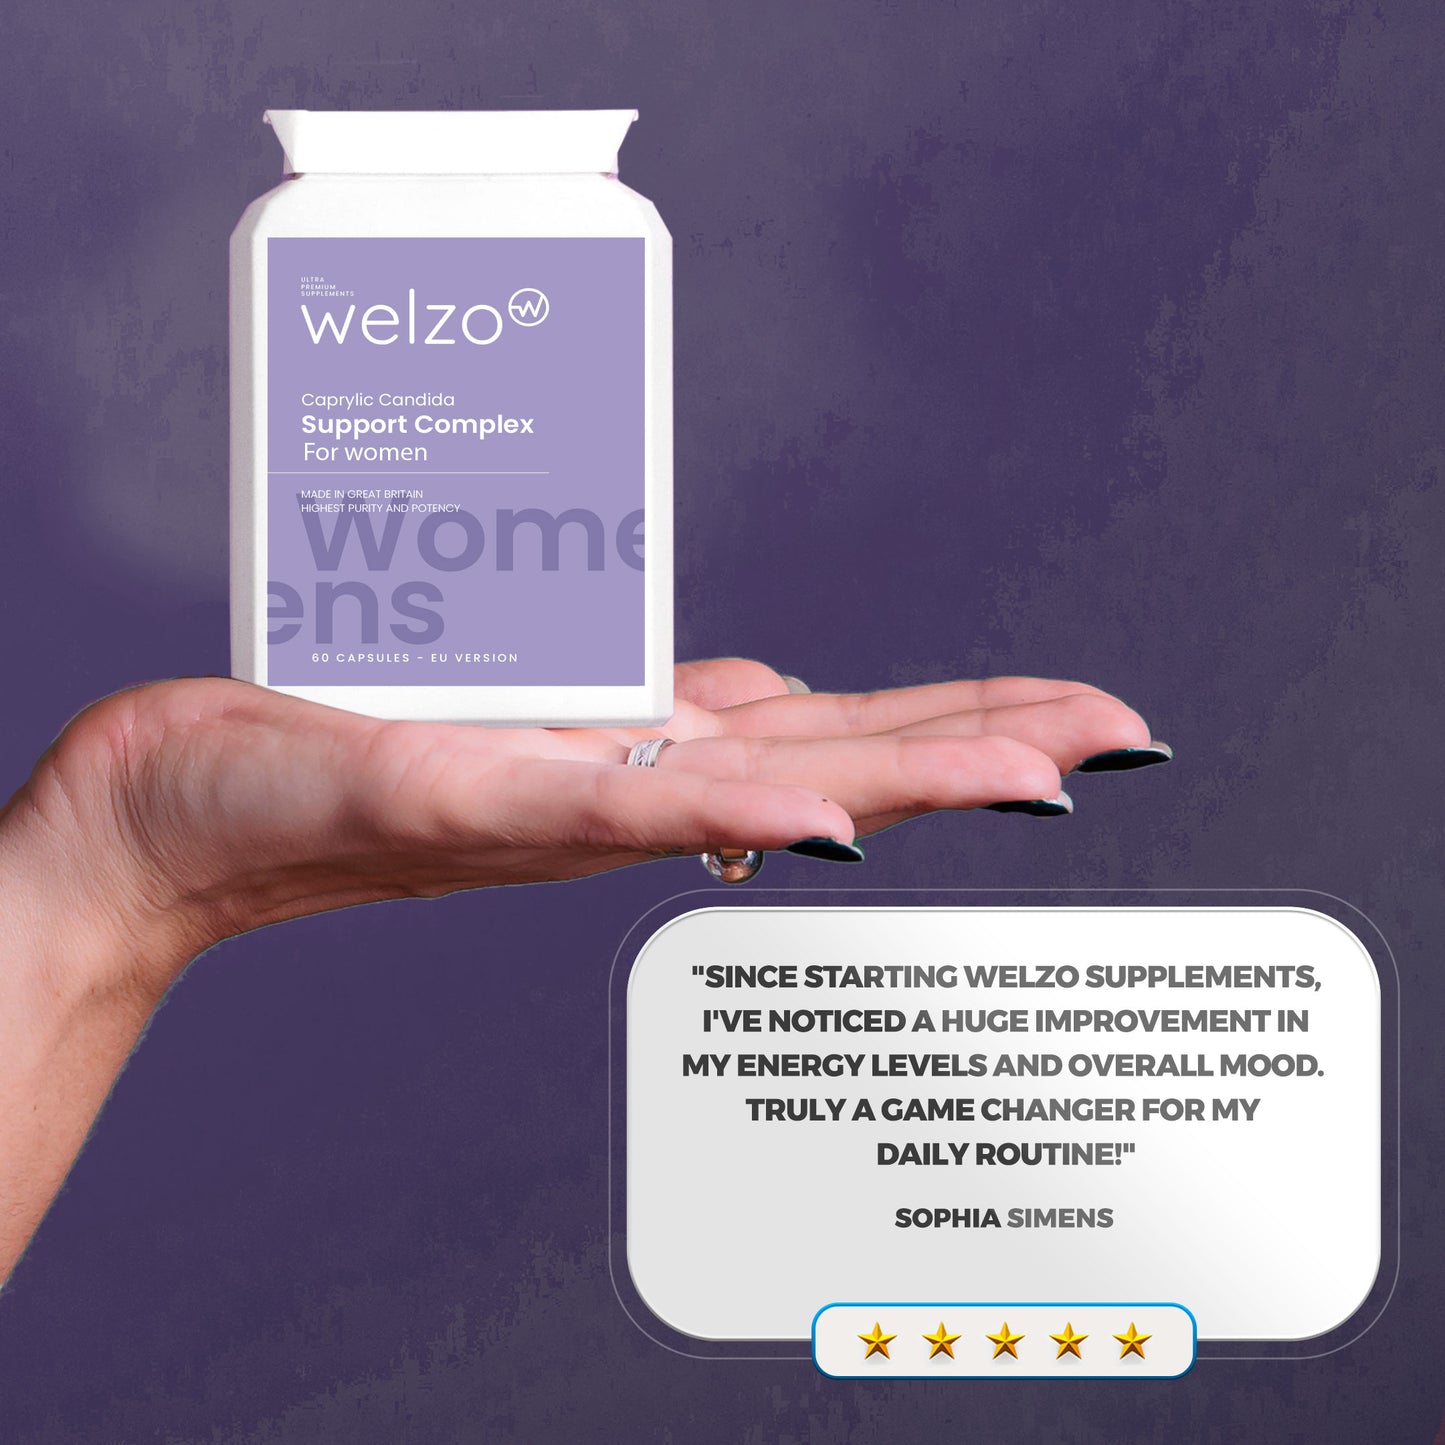 Welzo Caprylic Candida Support Complex for Women 60 Capsules - EU Version